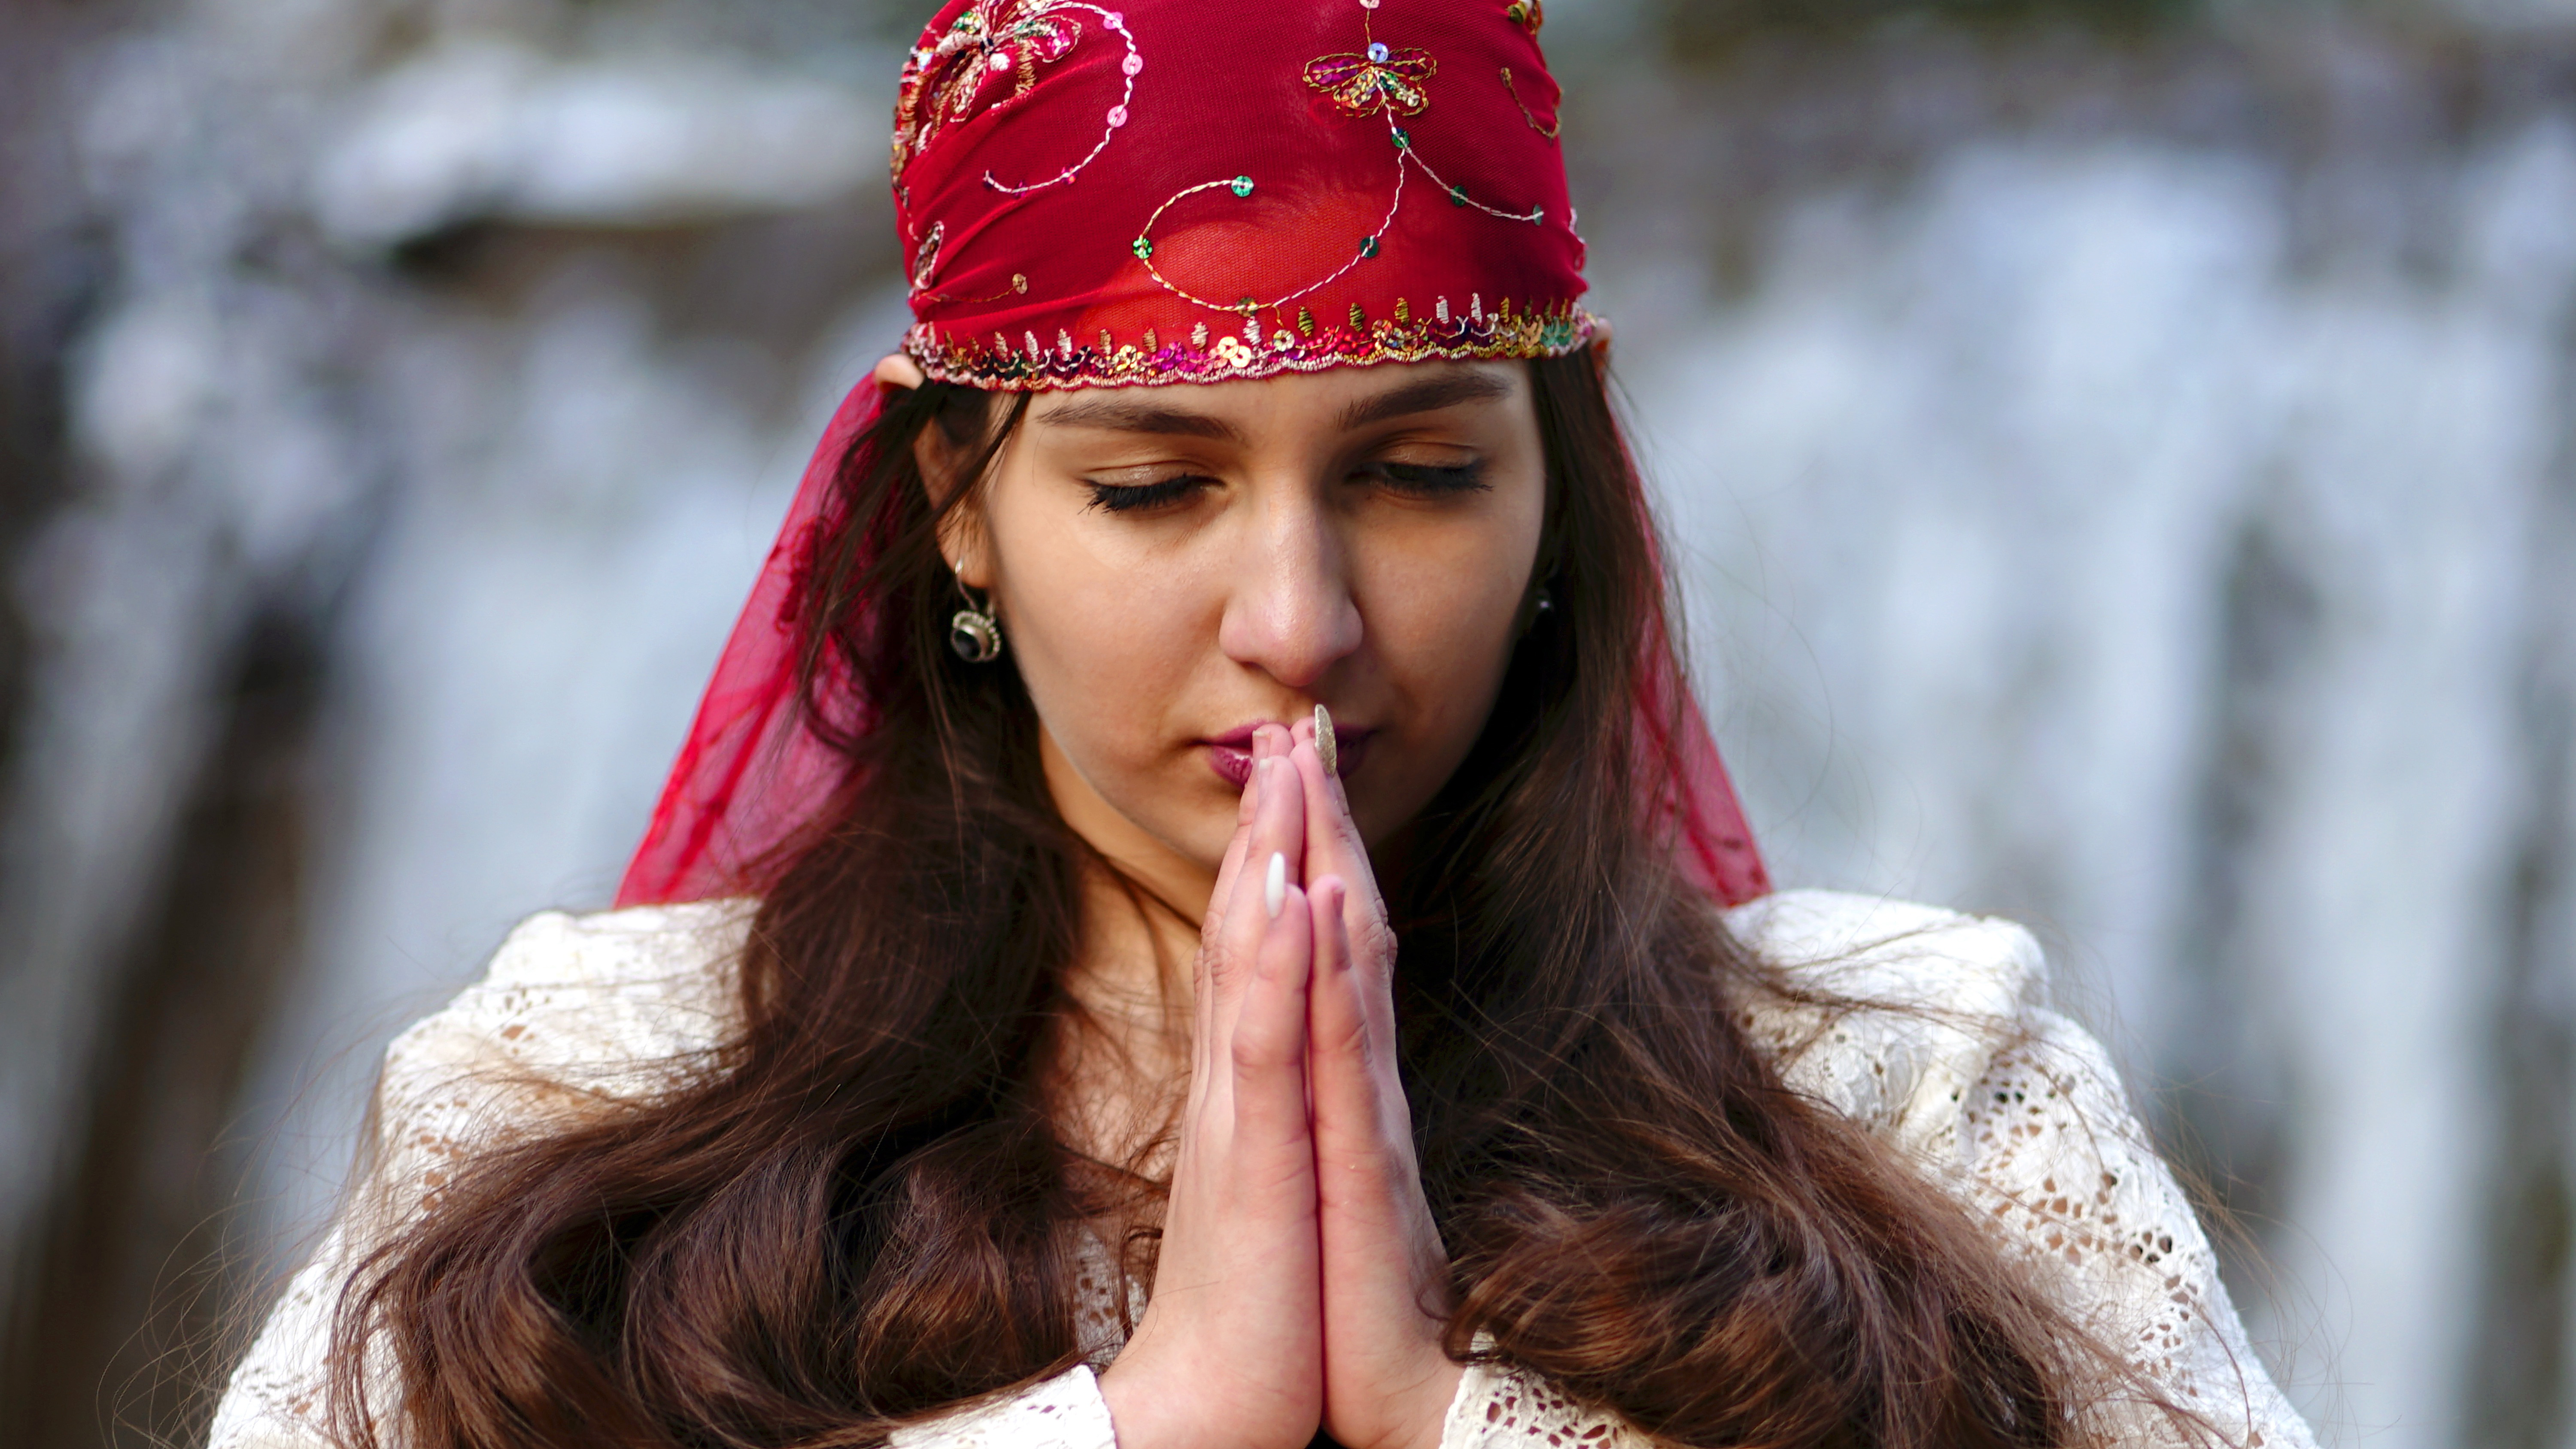 Young Woman Praying image - Free stock photo - Public Domain photo ...